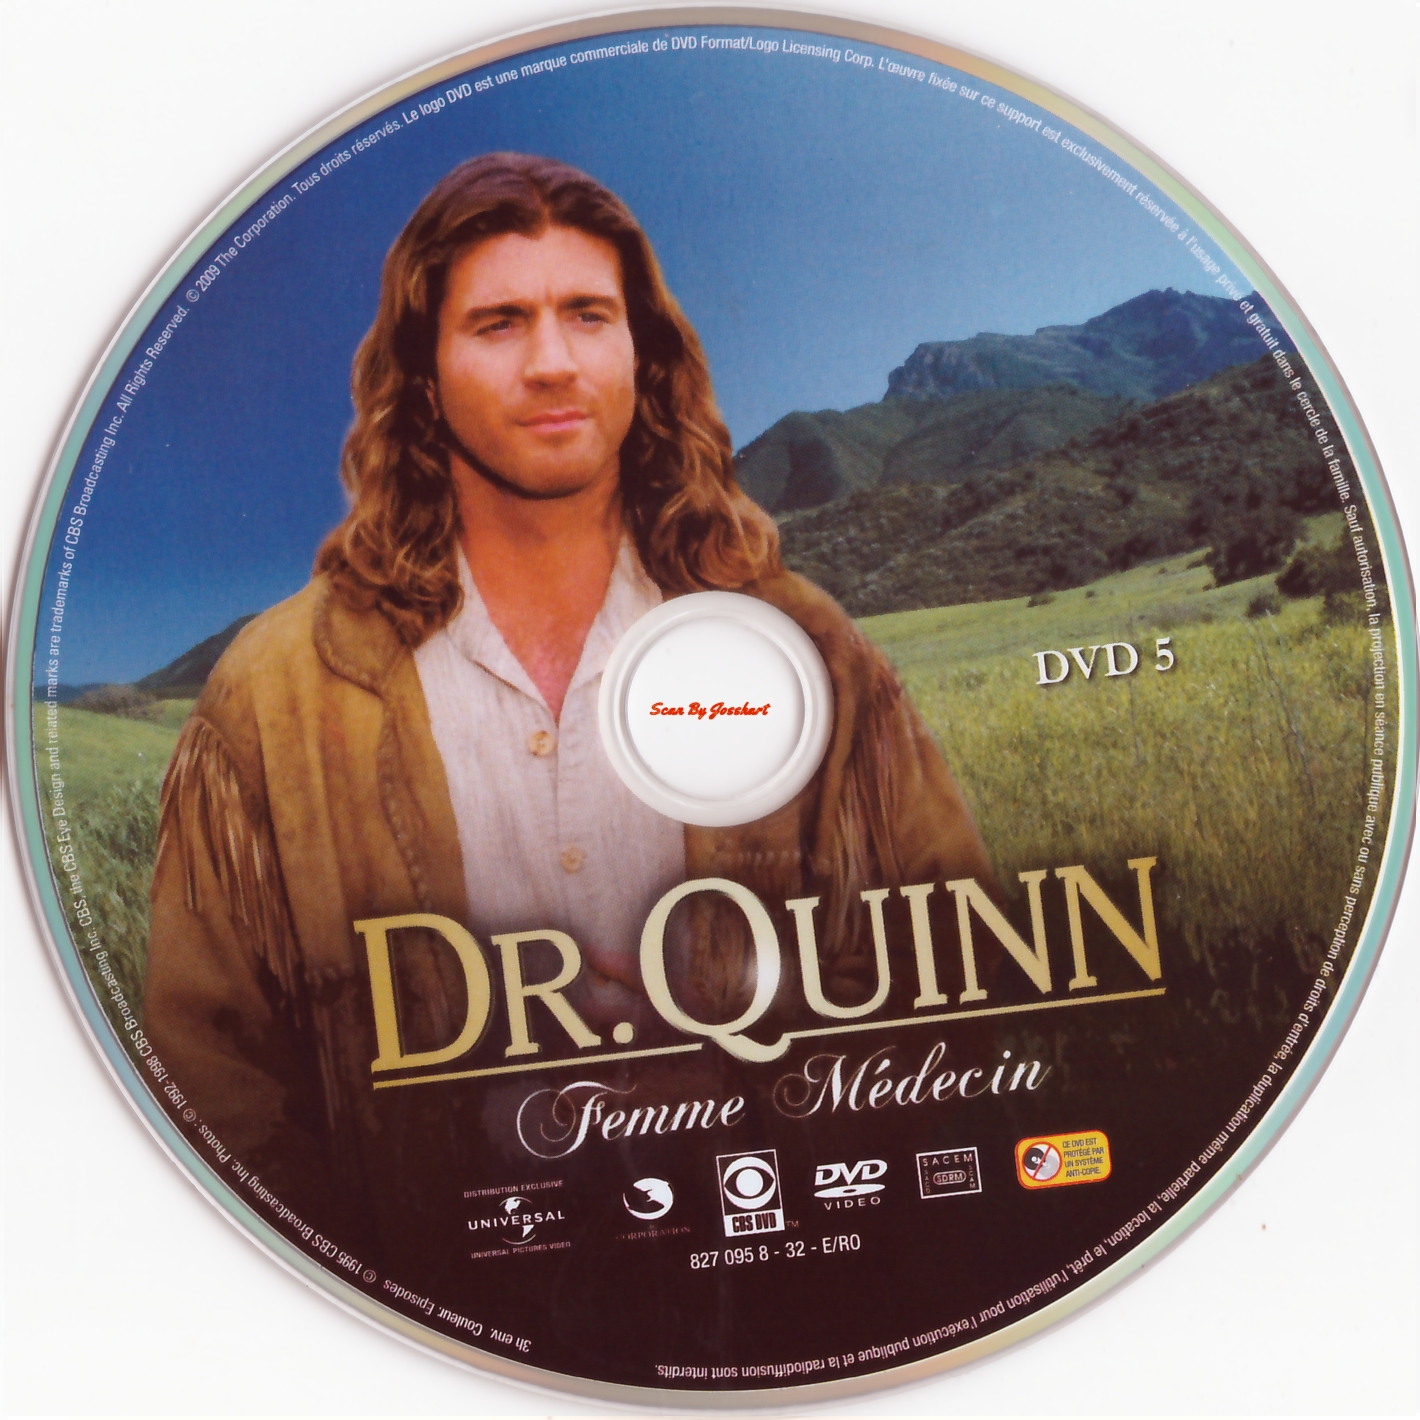 Docteur Quinn femme mdecin - Integrale Saison 3 DISC 5